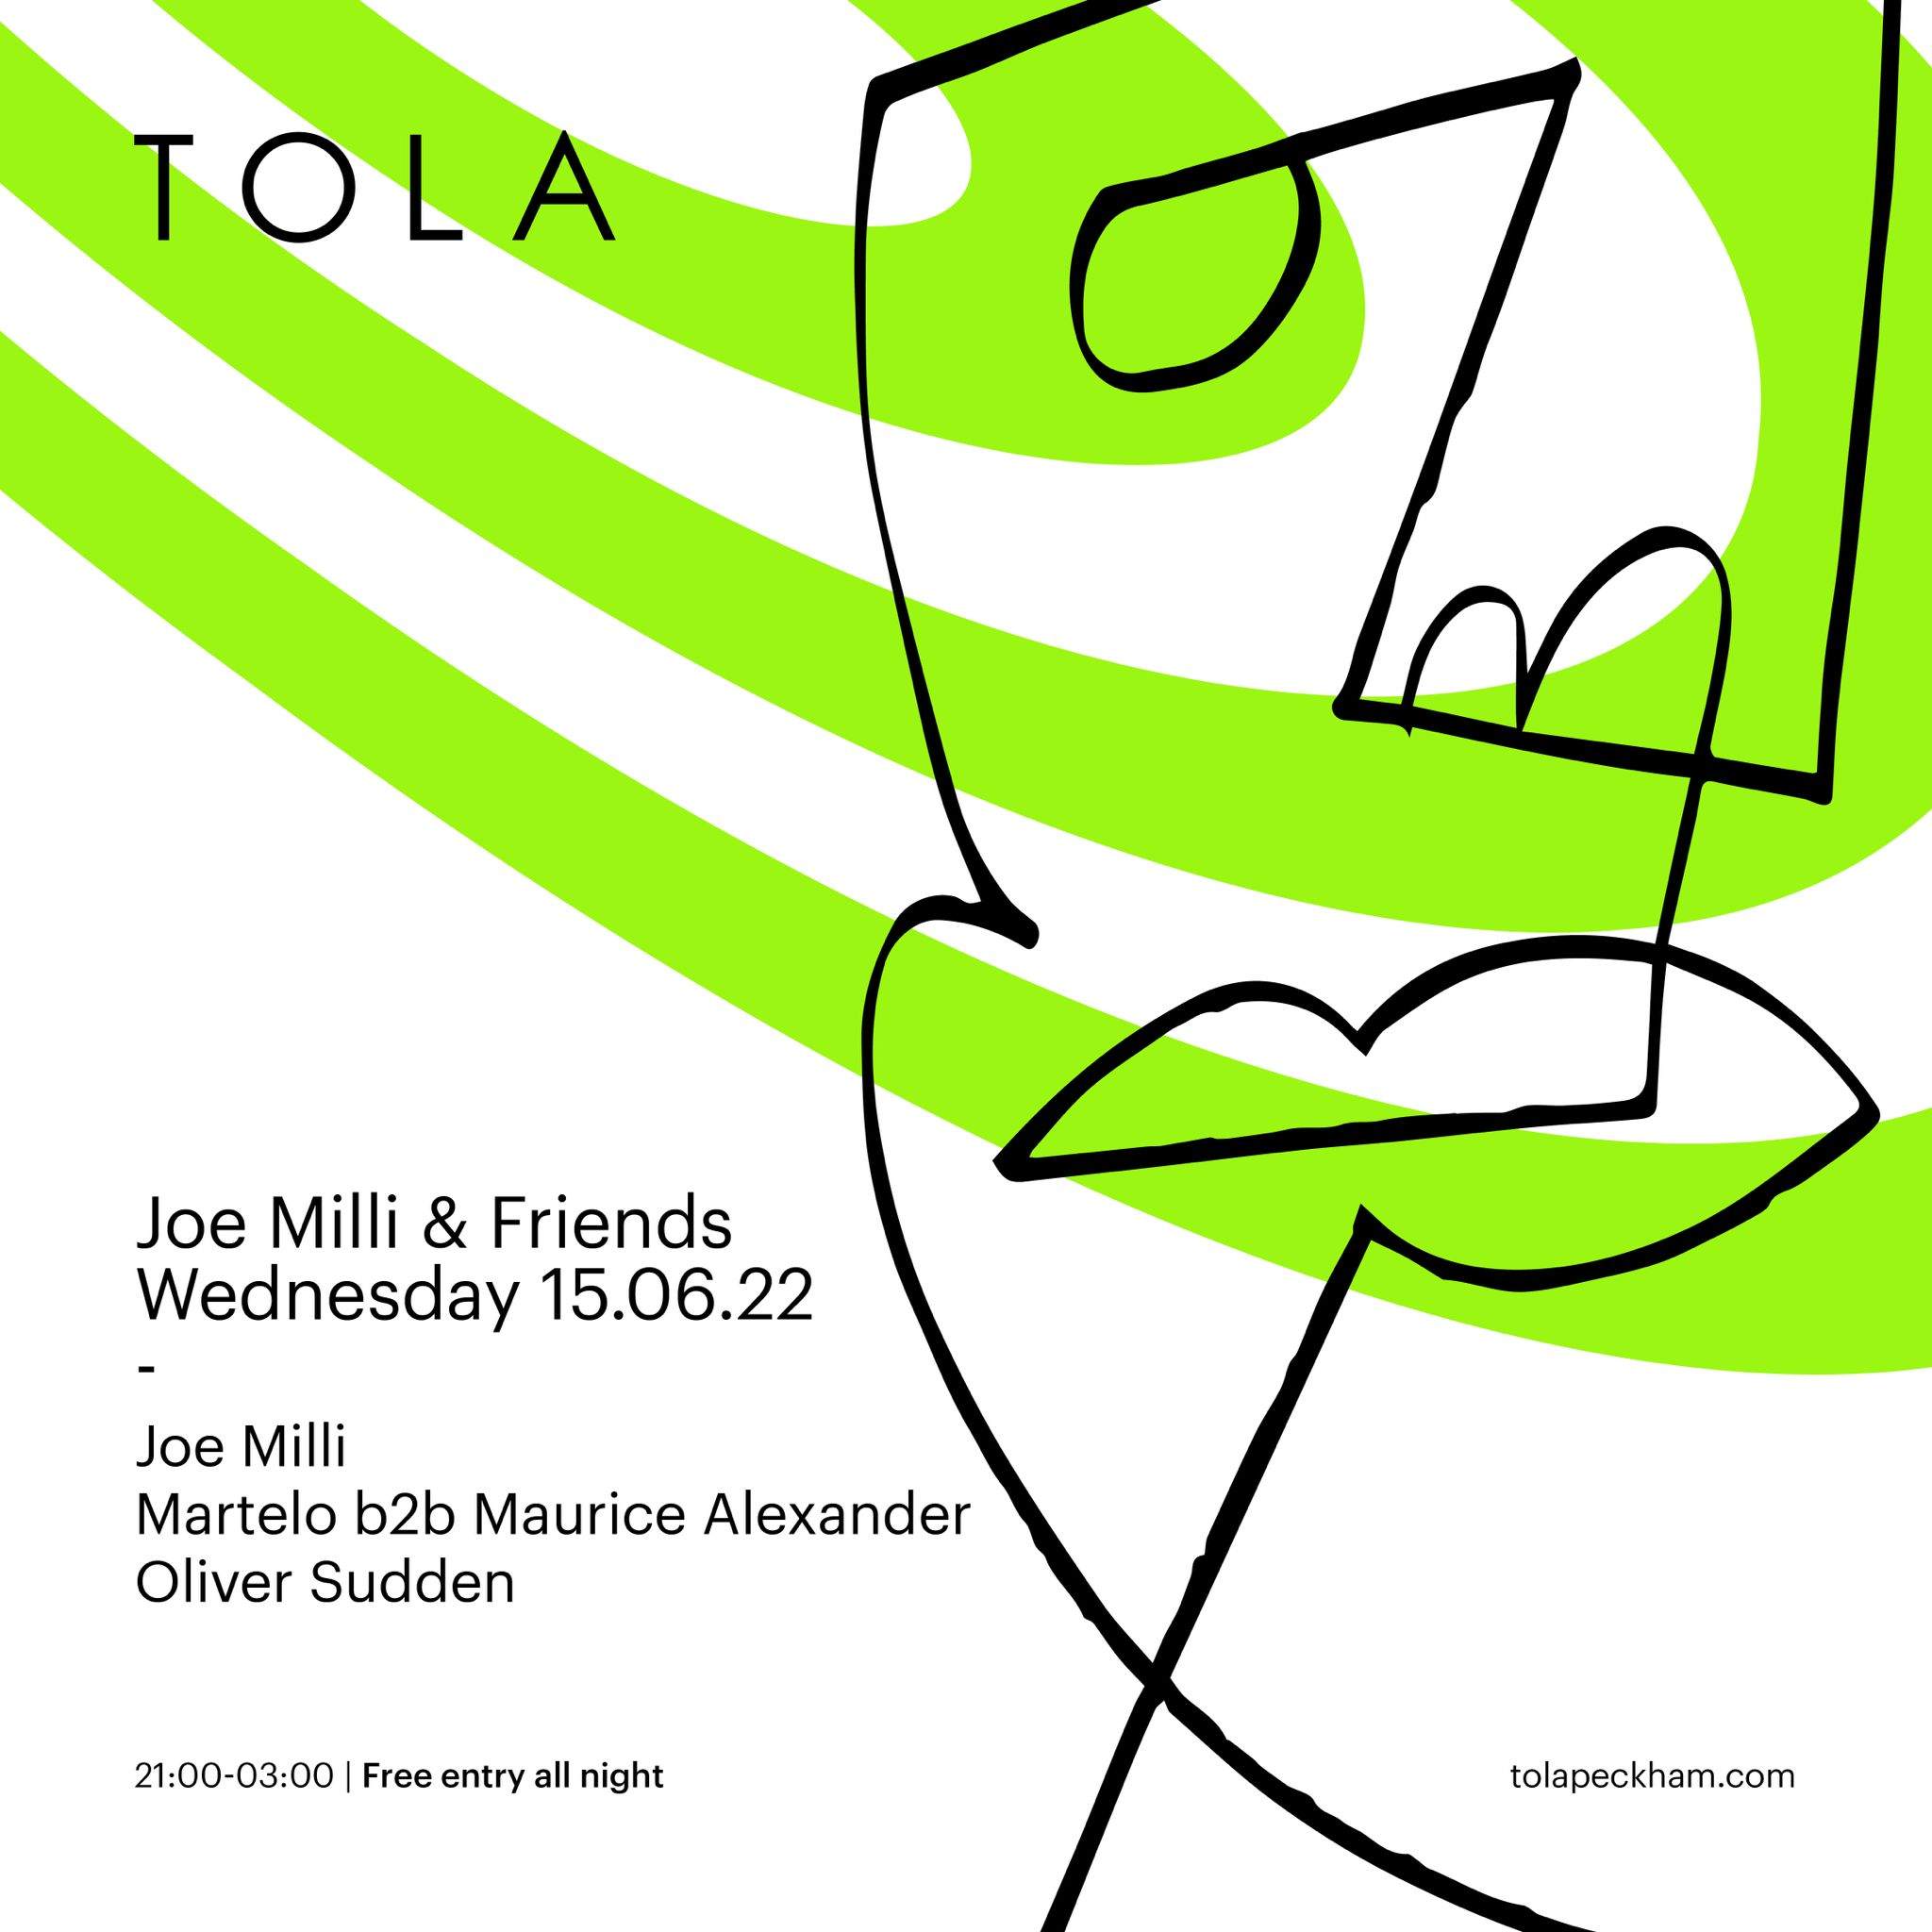 Joe Milli & Friends with Joe Milli, Martelo b2b Maurice Alexander & Oliver Sudden - フライヤー表